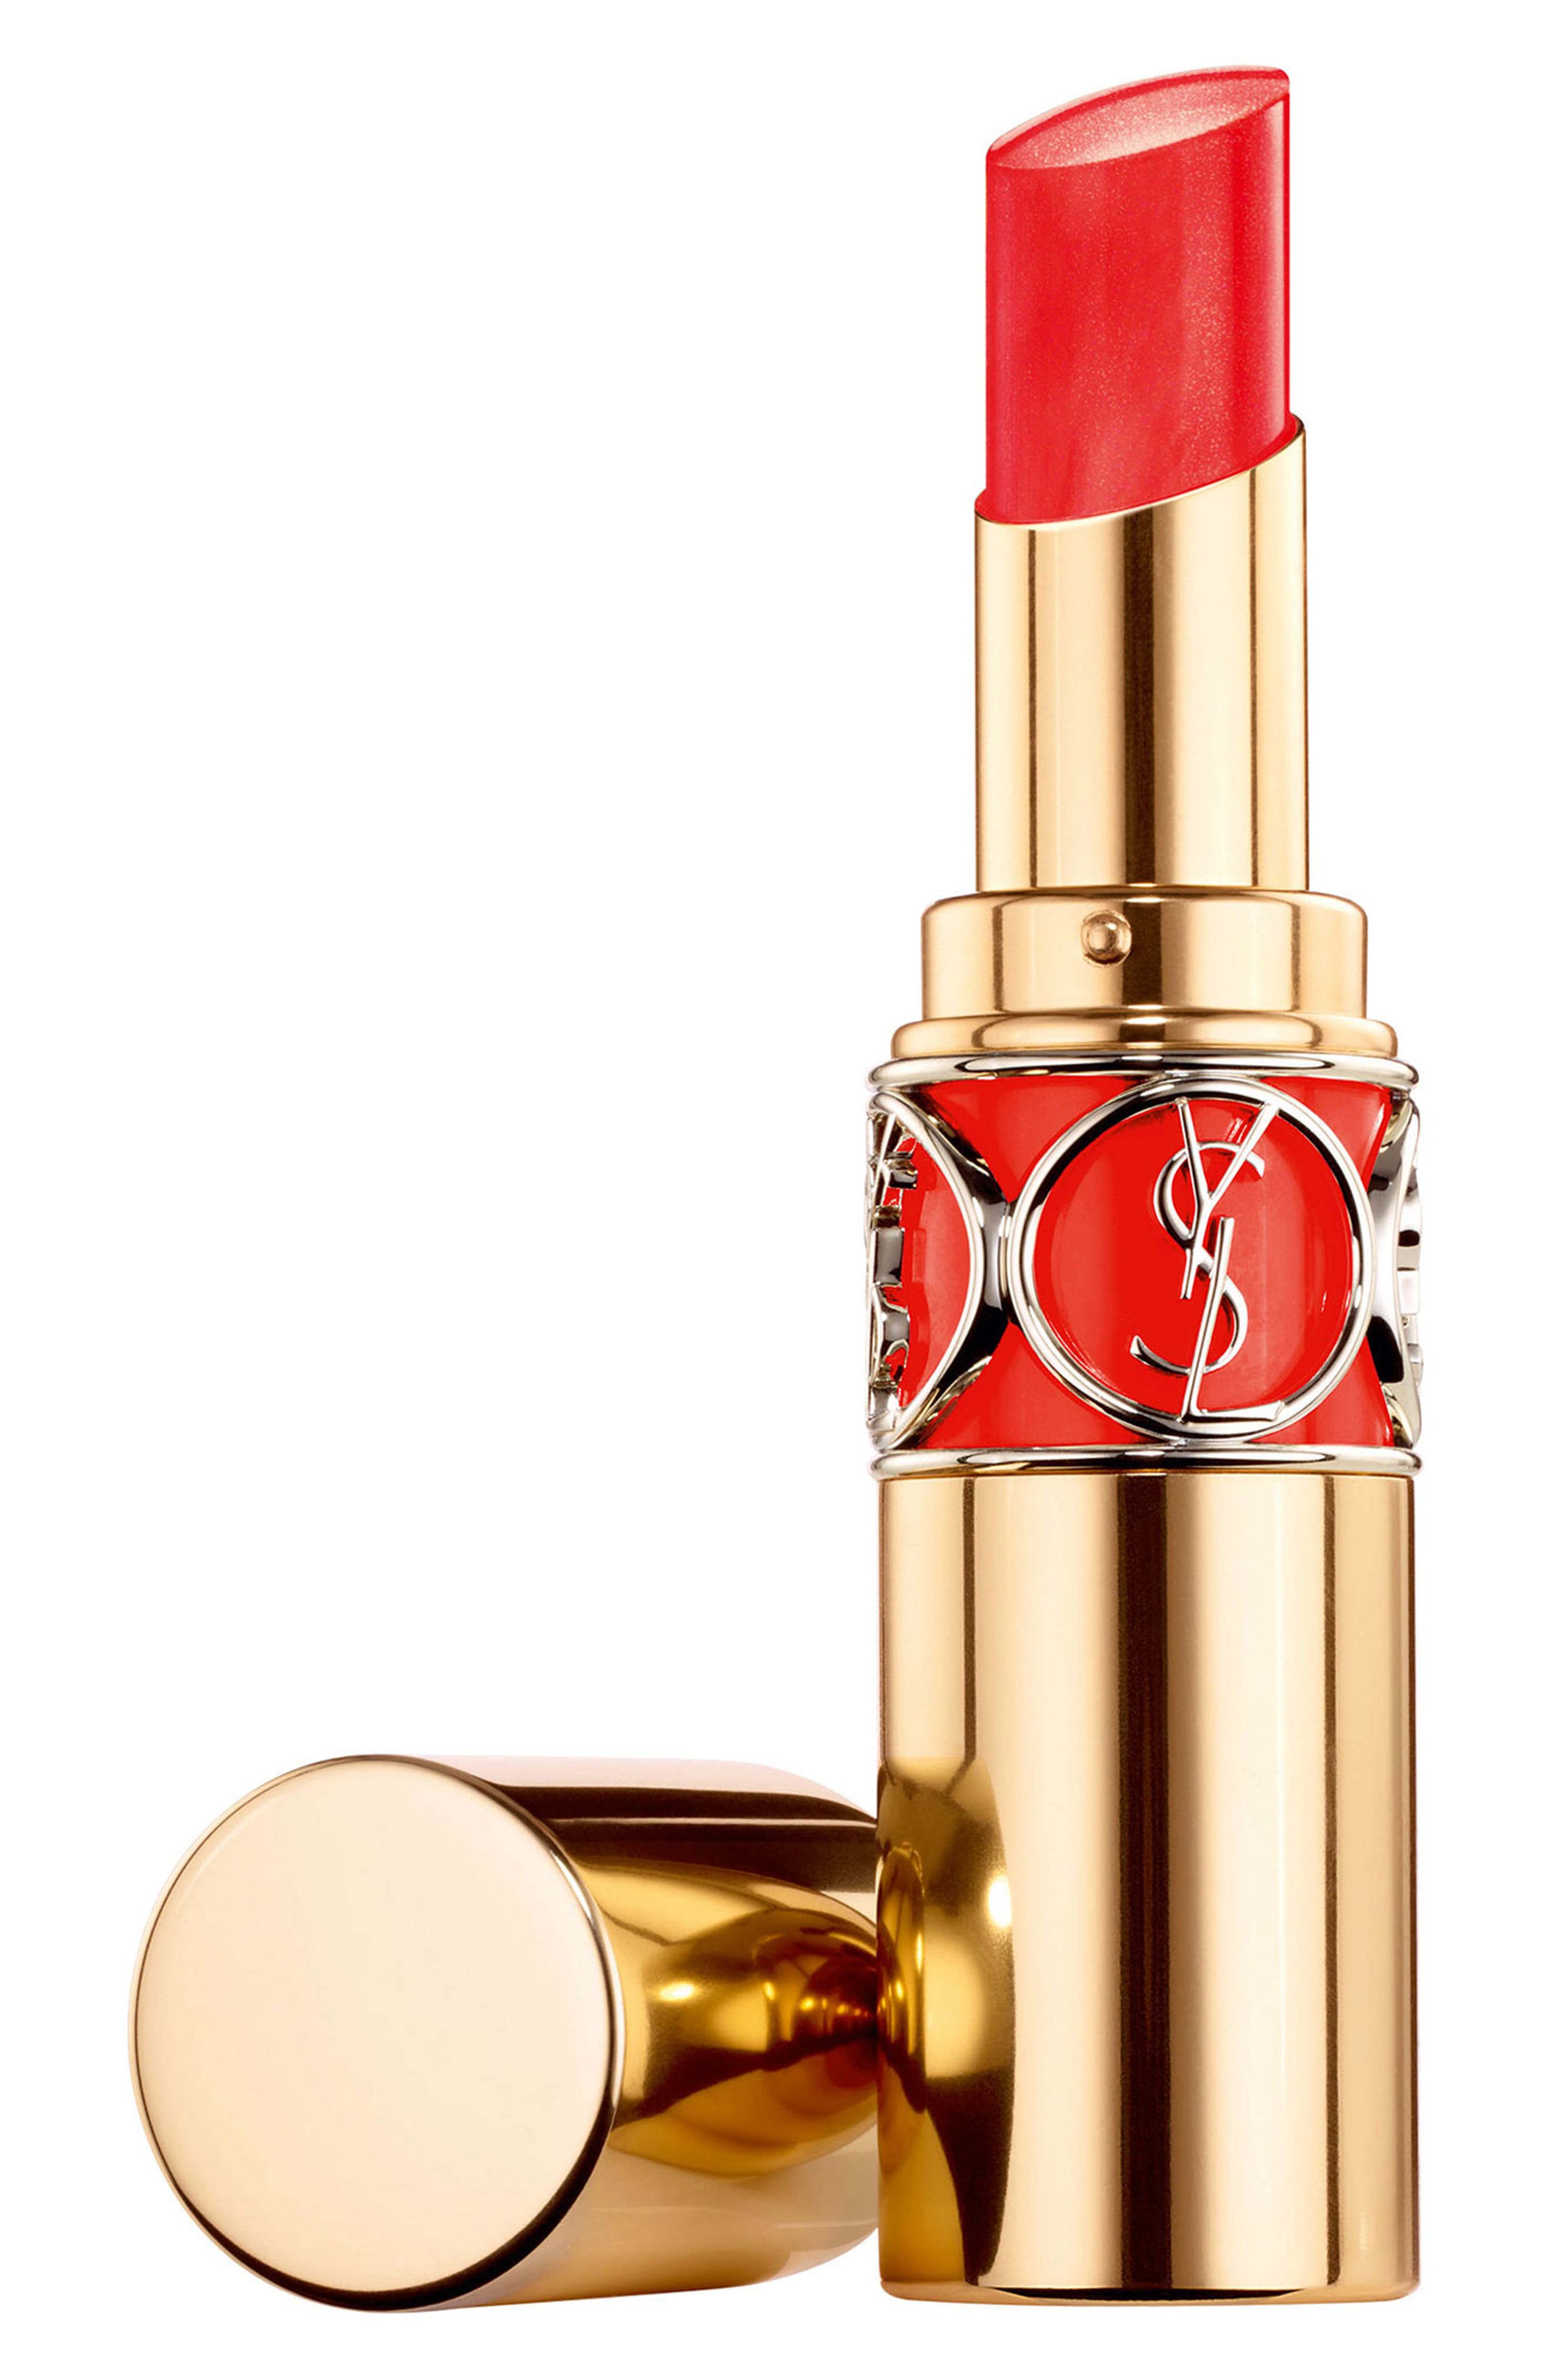 Yves Saint Laurent Rouge Volupte Shine Oil-in-Stick Lipstick Balm in 82 Orange Crepe